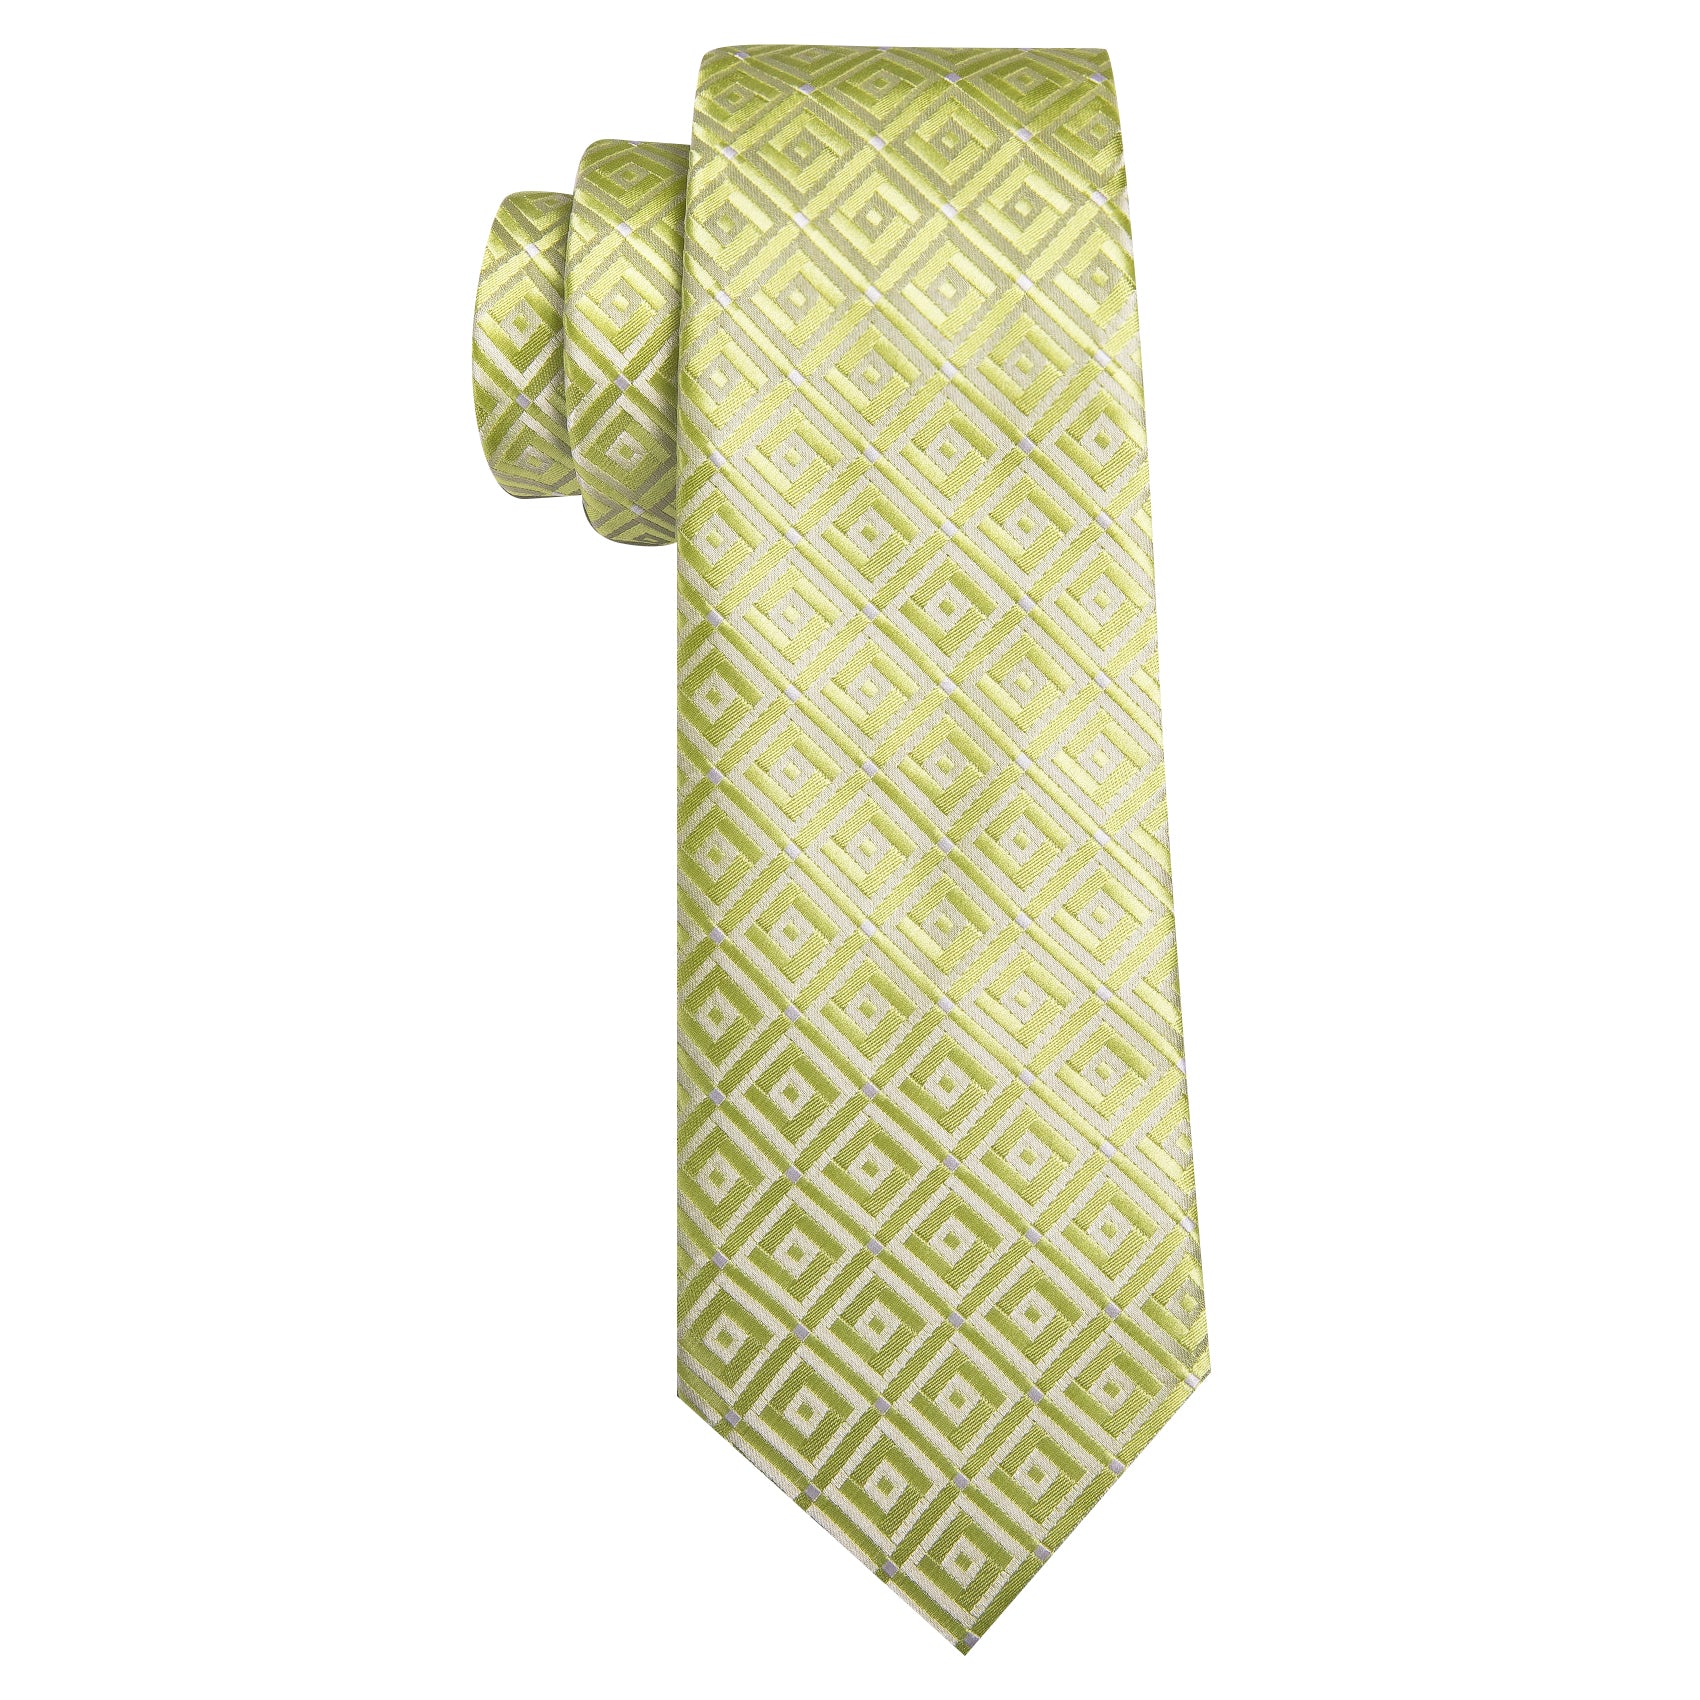 Barry Wang Novetly Yellow Green Plaid Silk Tie Handkerchief Cufflinks Set